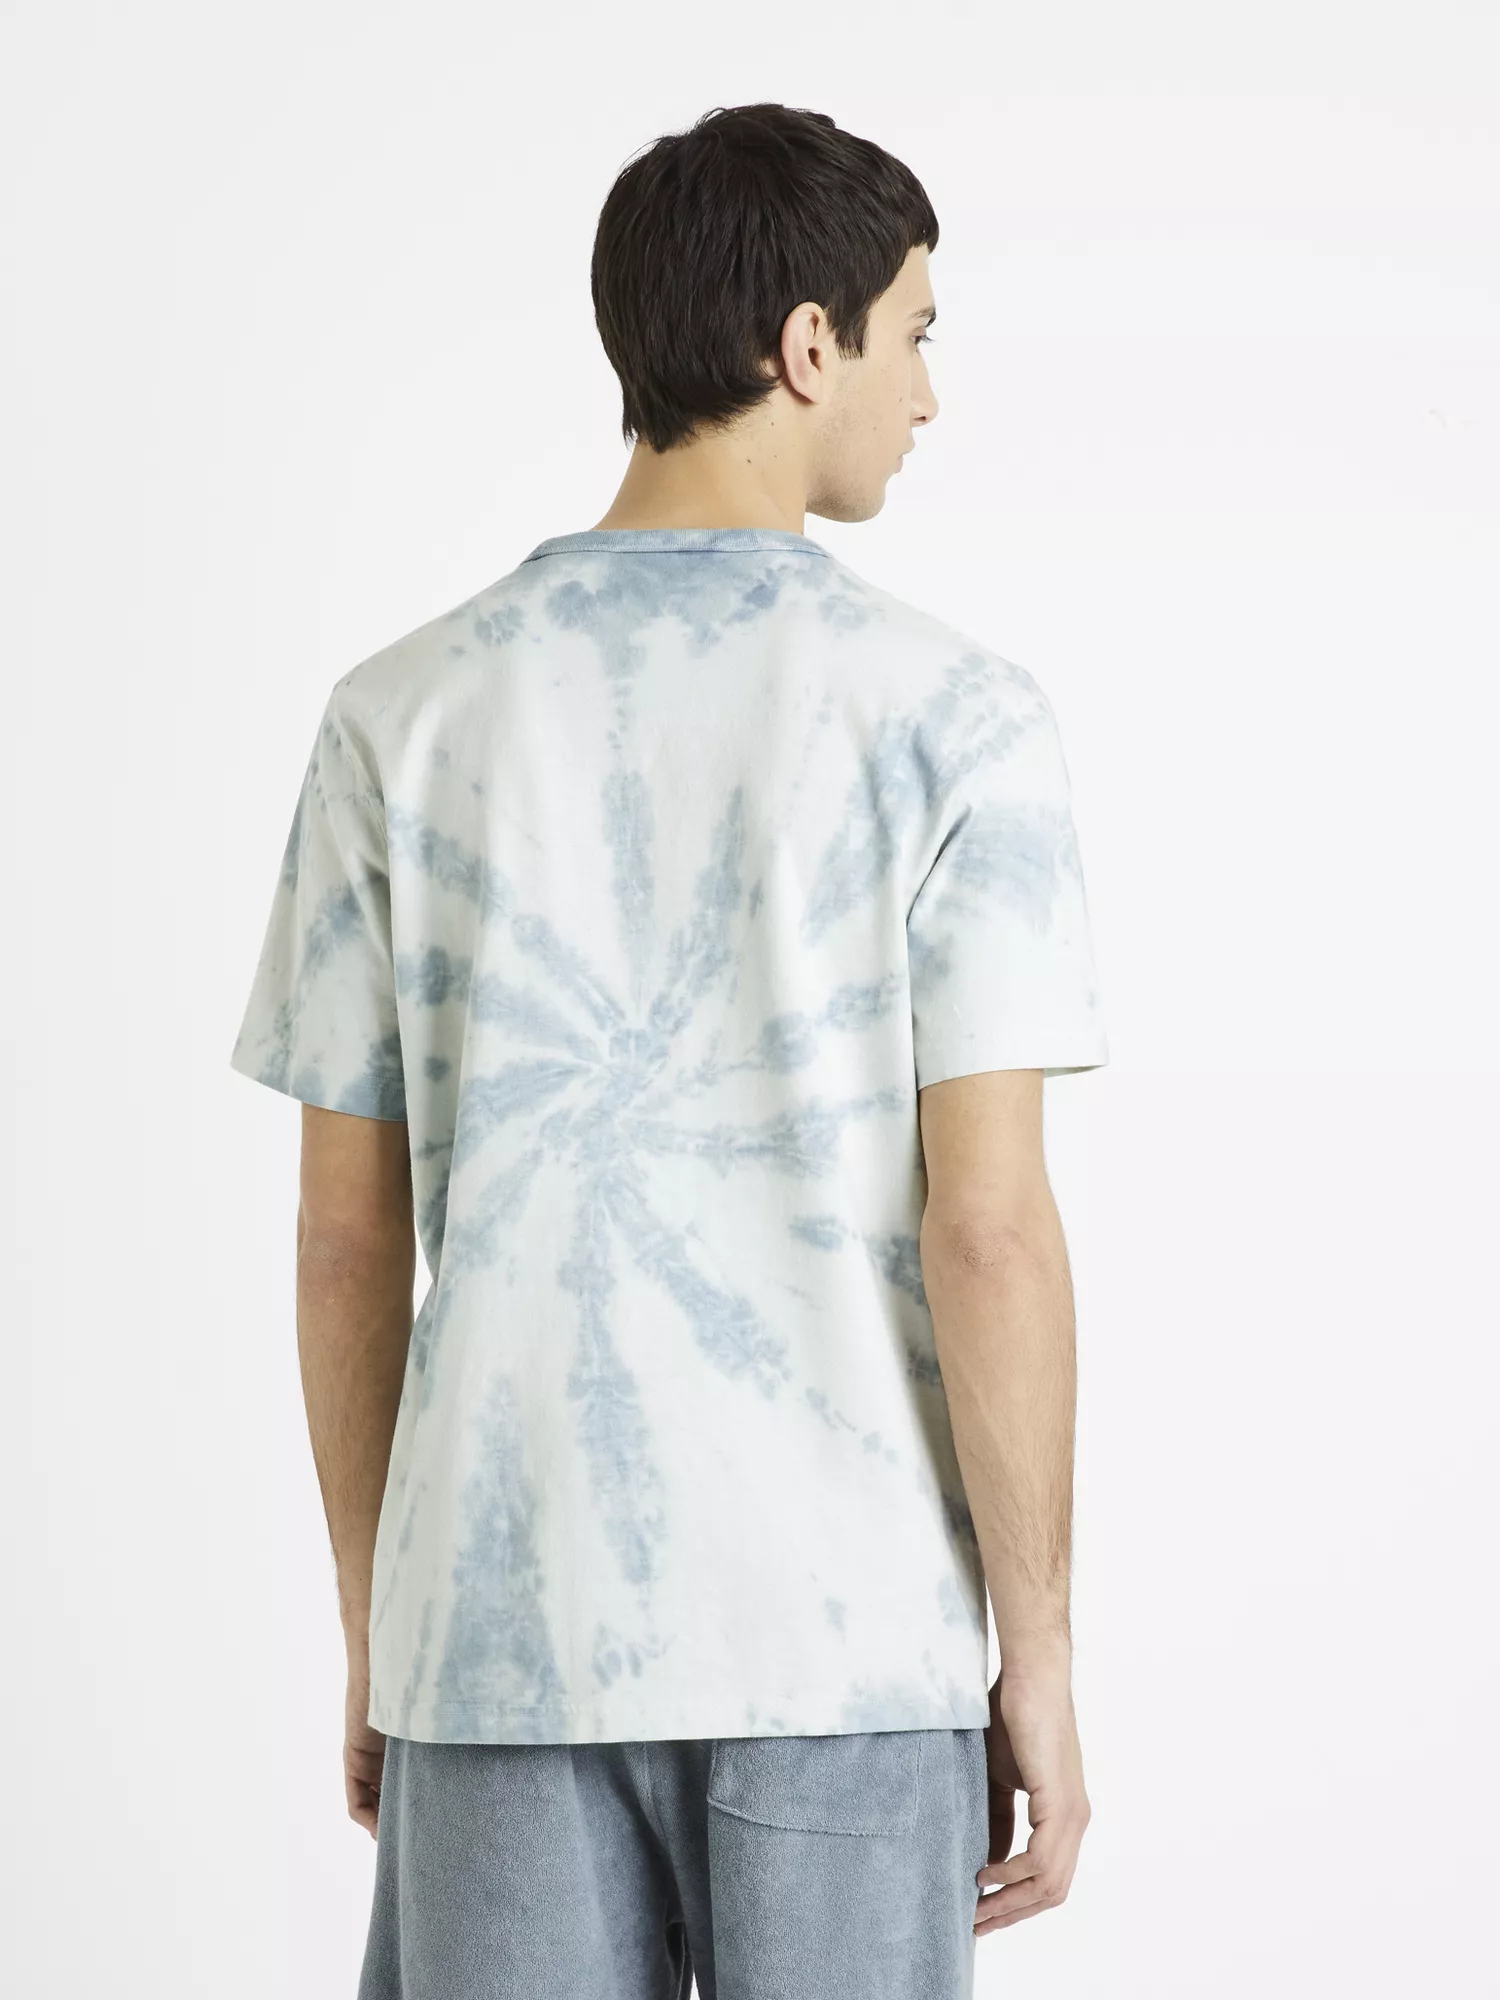 Batikované tričko Deswirl (2)